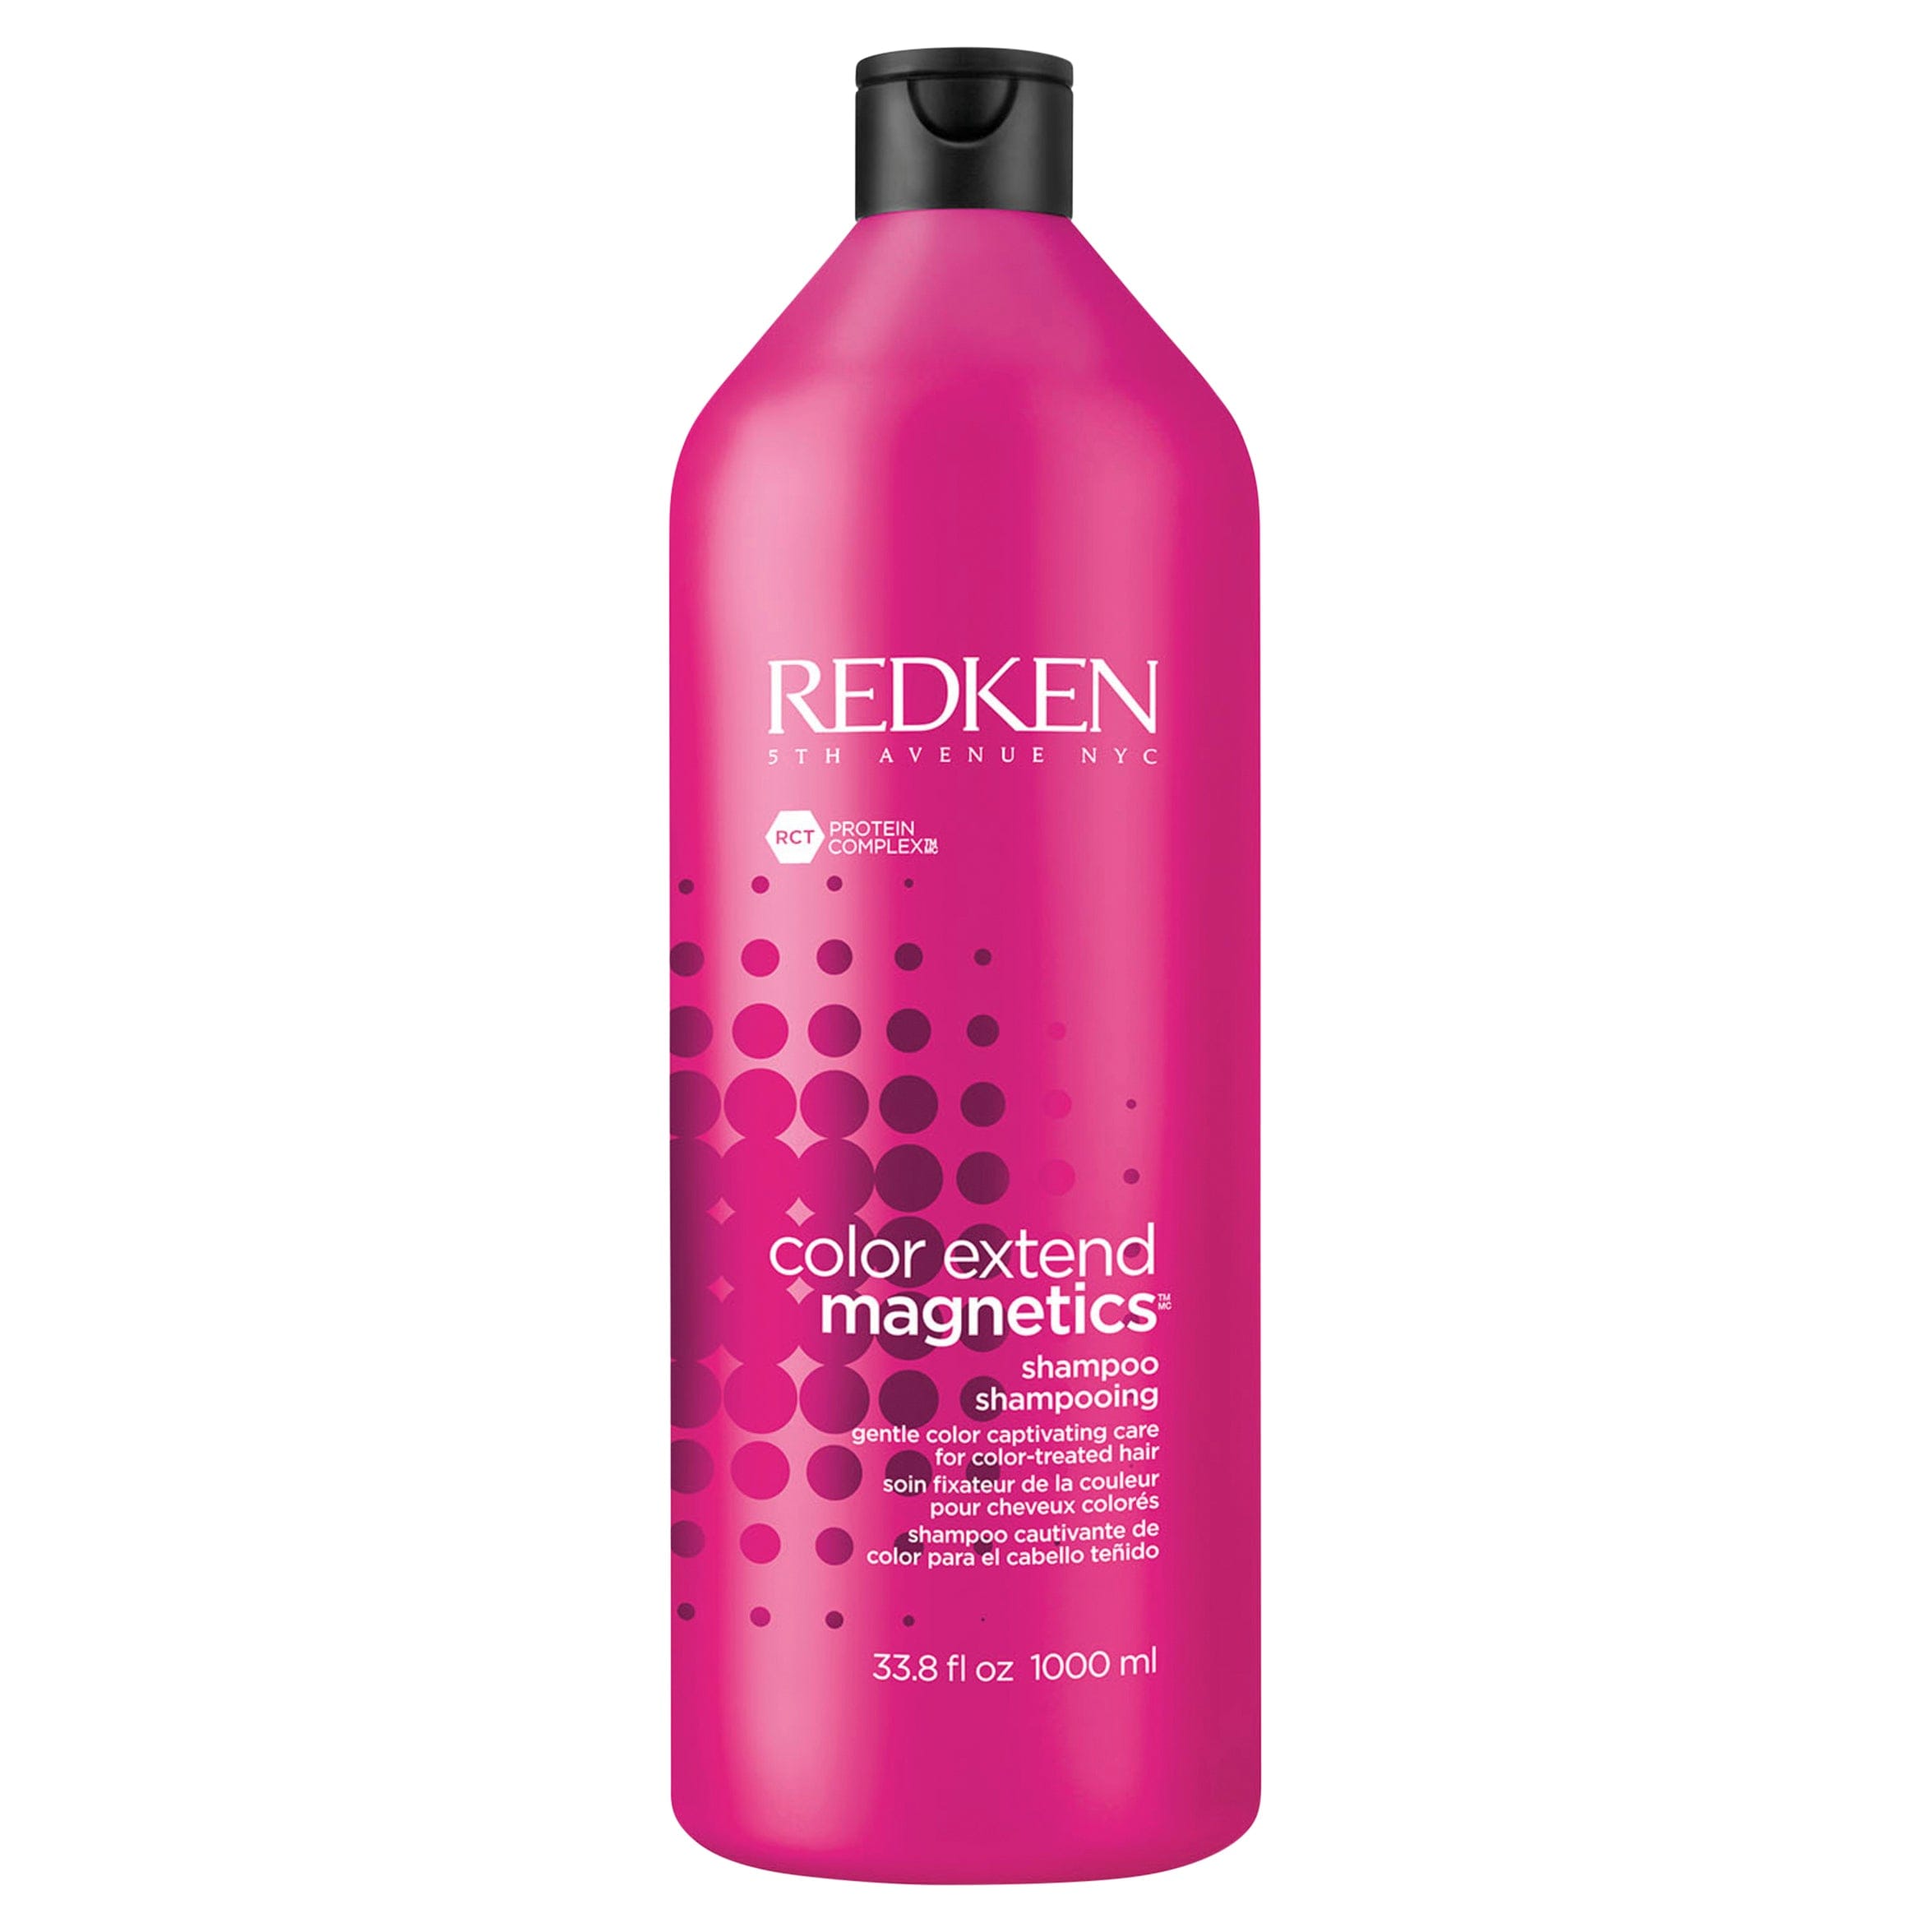 Redken® Color Extend Magnetics Shampoo.